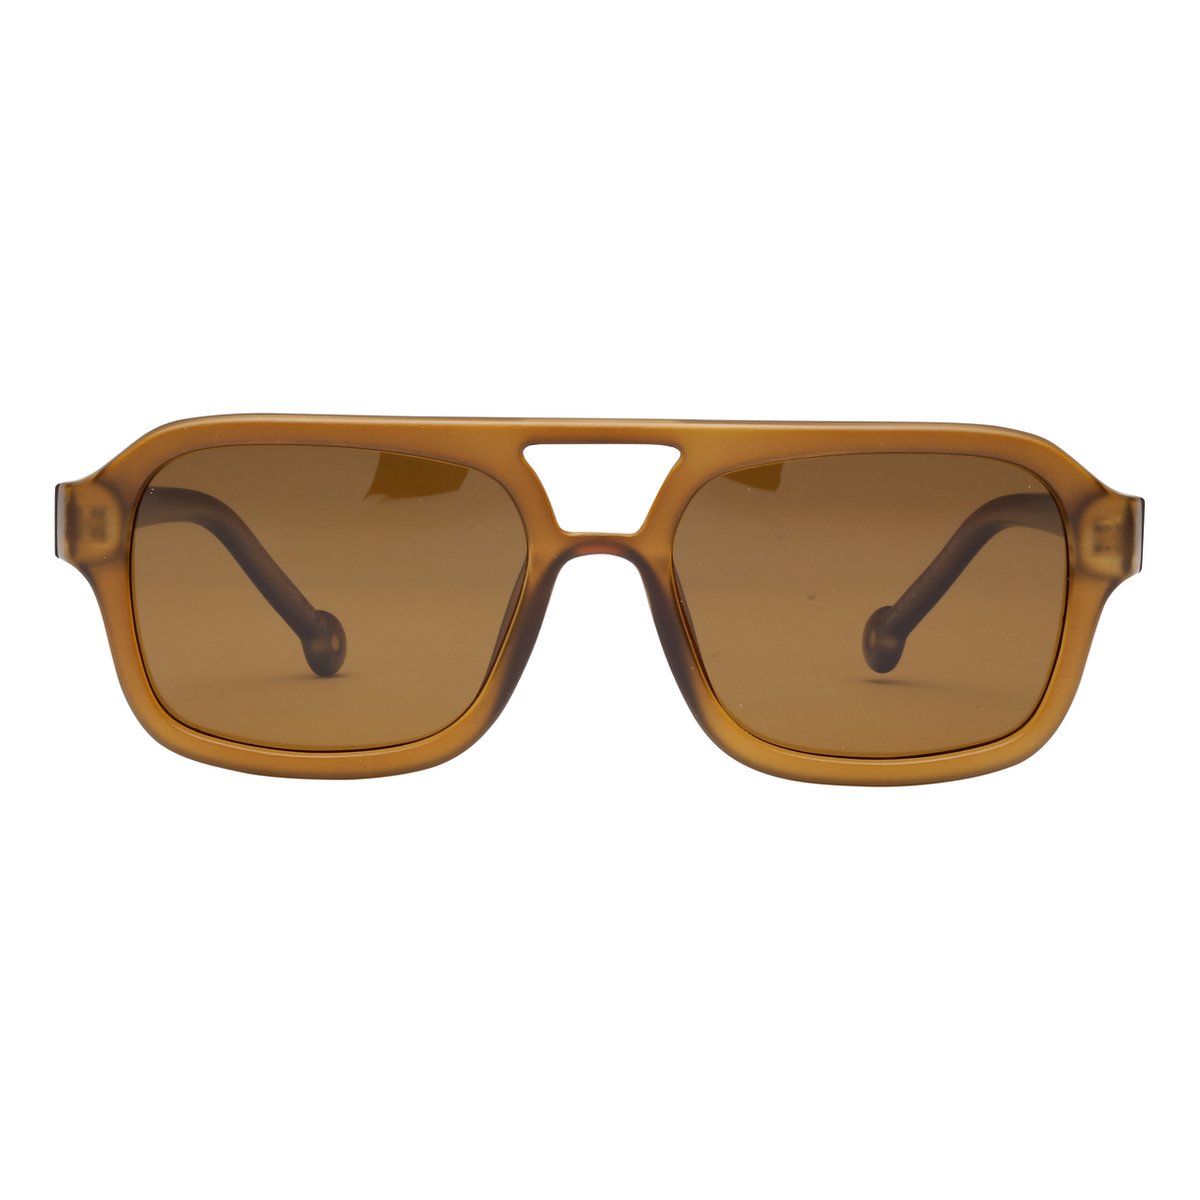 ™Monkeyglasses Alsace 07 Matt brown Sun - Zonnebril - 100% UV bescherming - Danish Design - 100% Upcycled